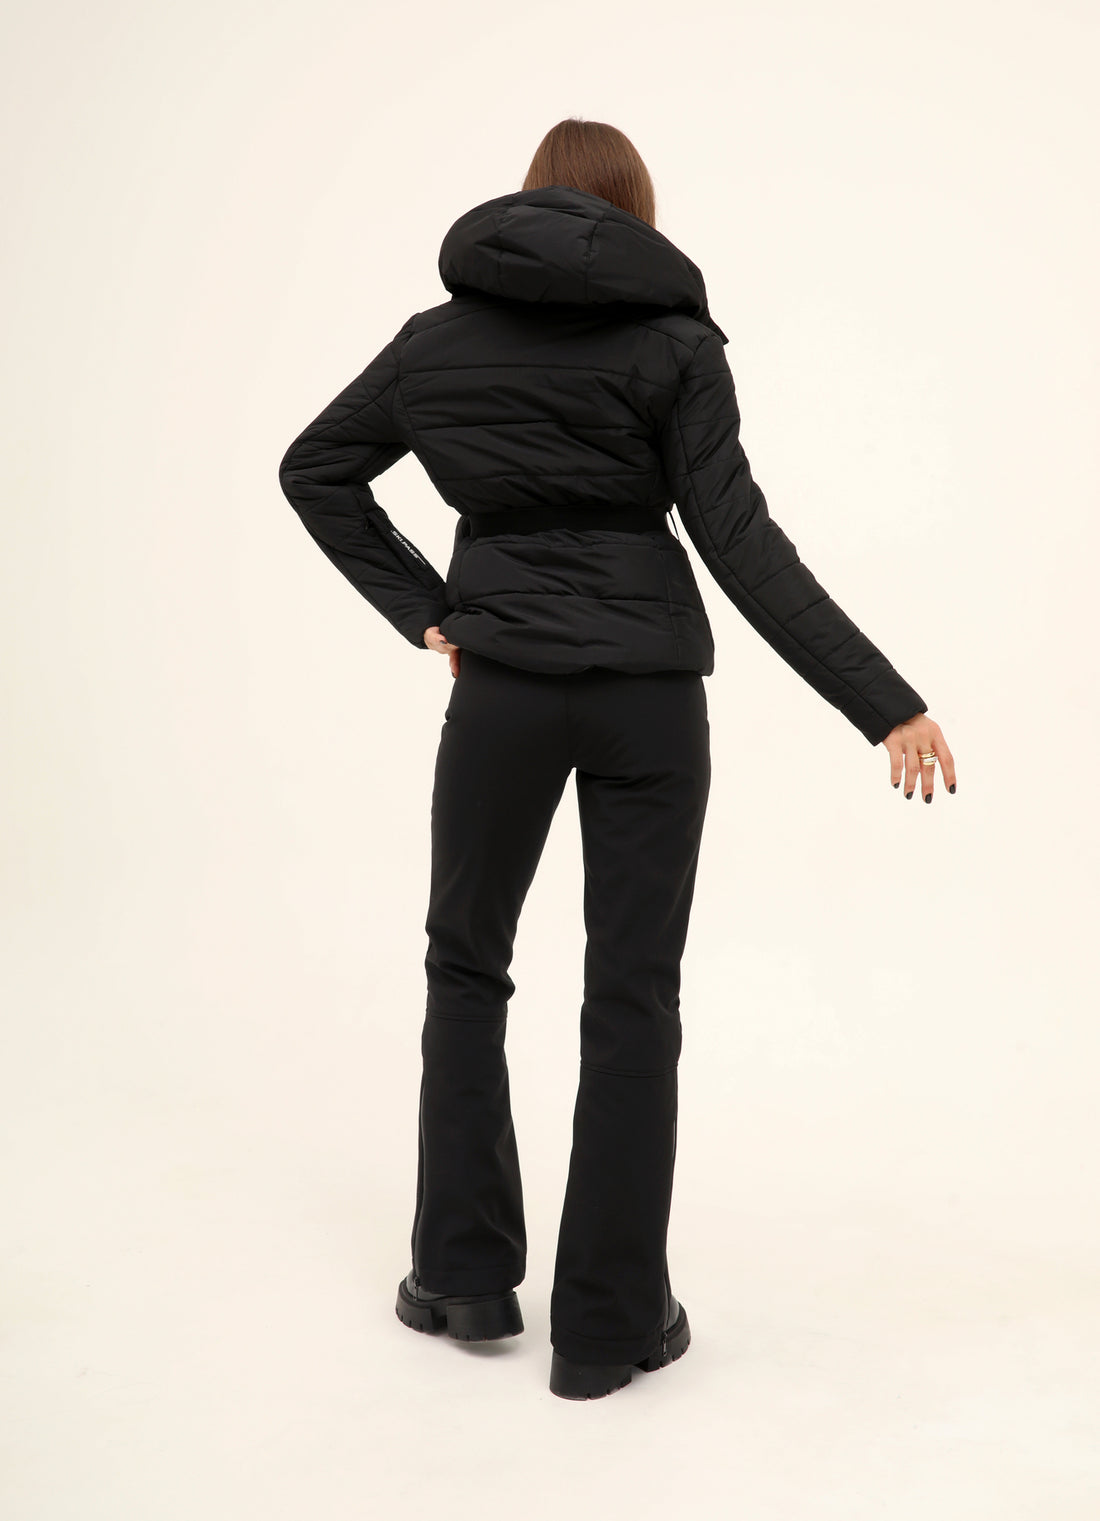 Black two piece ski outfit - McKinley Black - Black ski suit